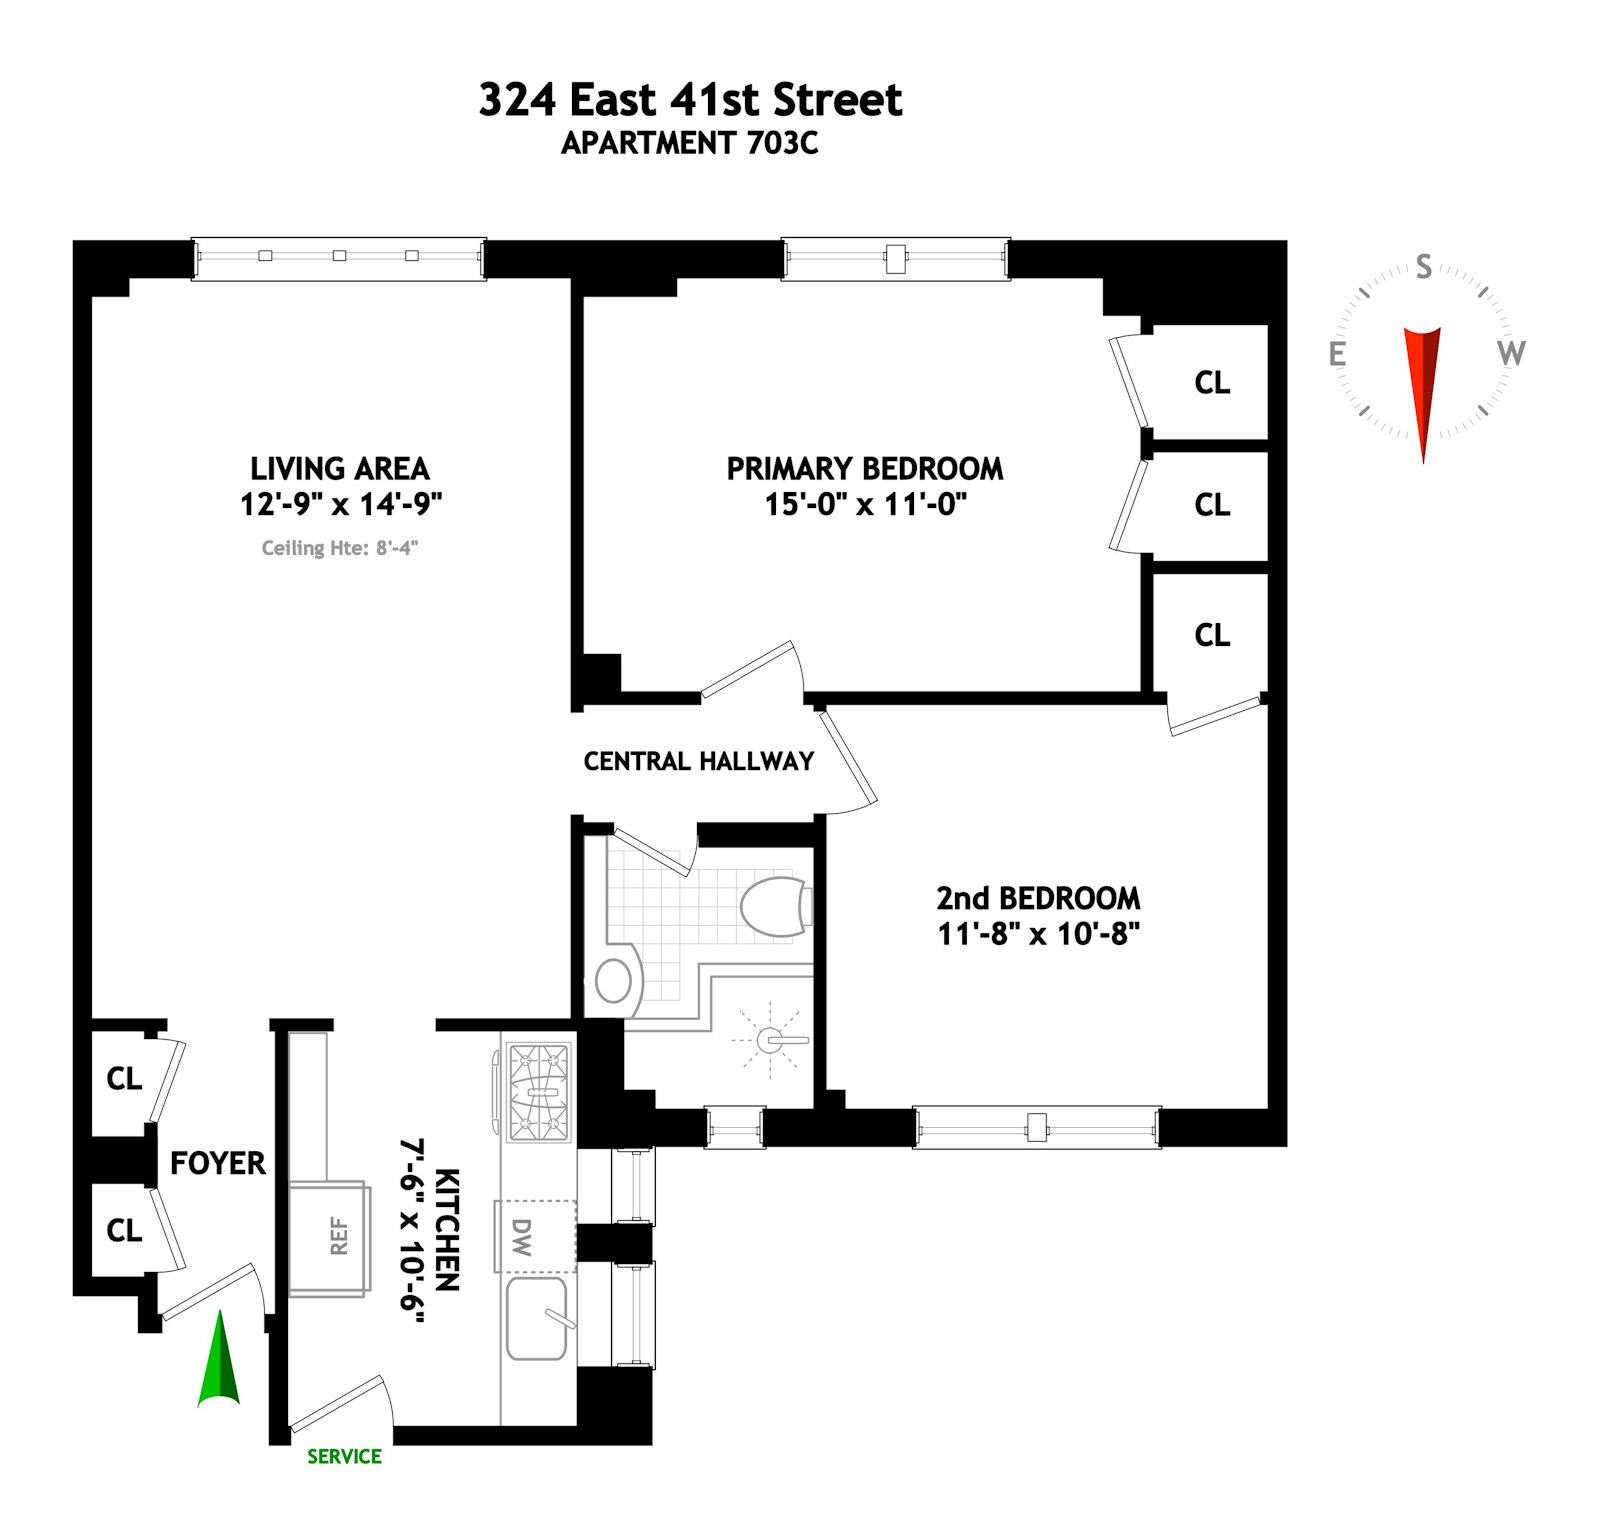 Floorplan for 324 East 41st Street, 703C